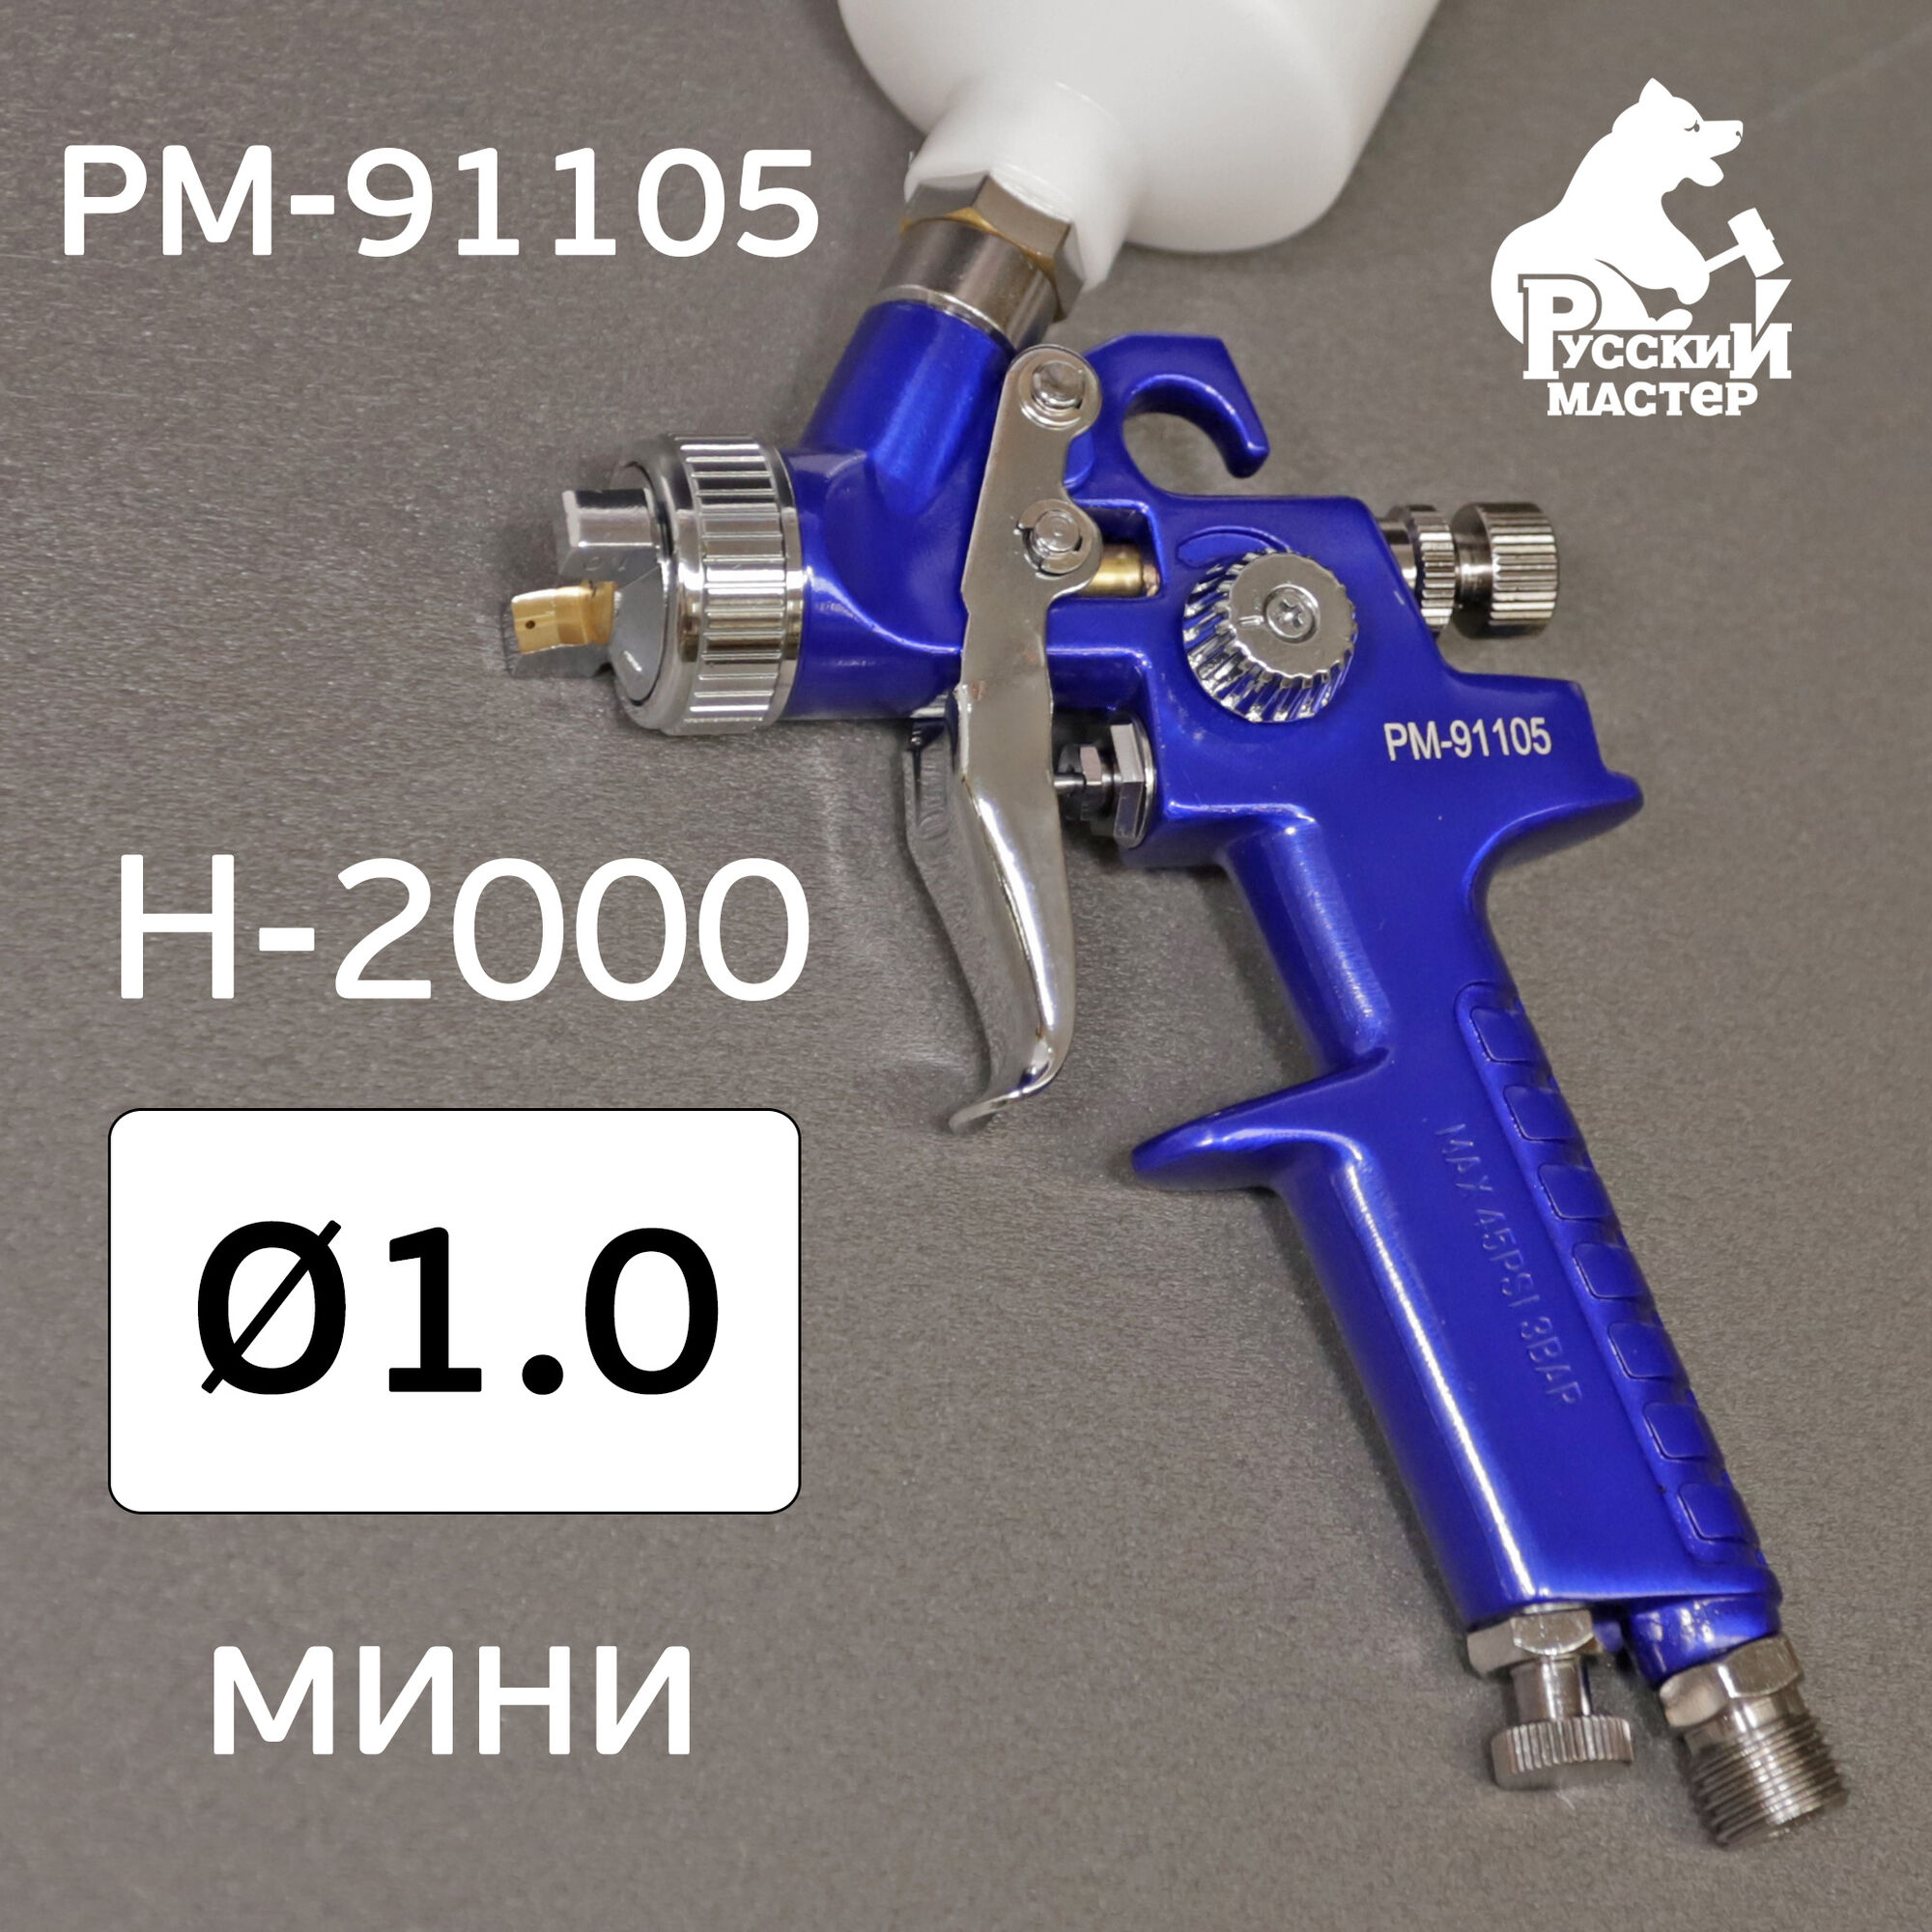 Краскопульт мини H-2000 (1,0мм) Русский Мастер РМ-91105 с верхним бачком 125мл